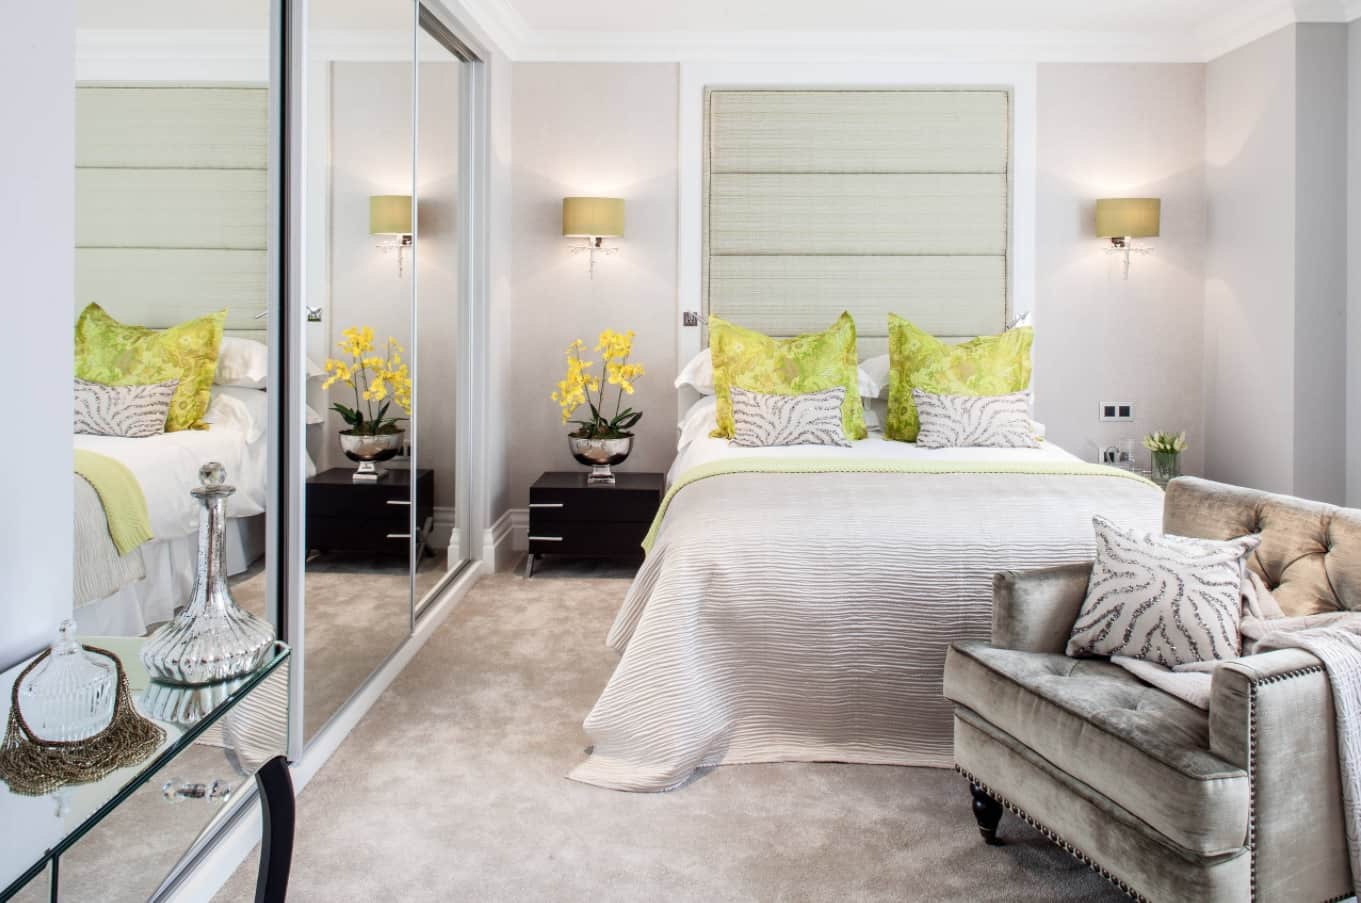 Rugs, Carpet, Carpeting Interior Design Ideas. Casual modern designed bedroom with mirror glass dorr wardrobe and soft headboard